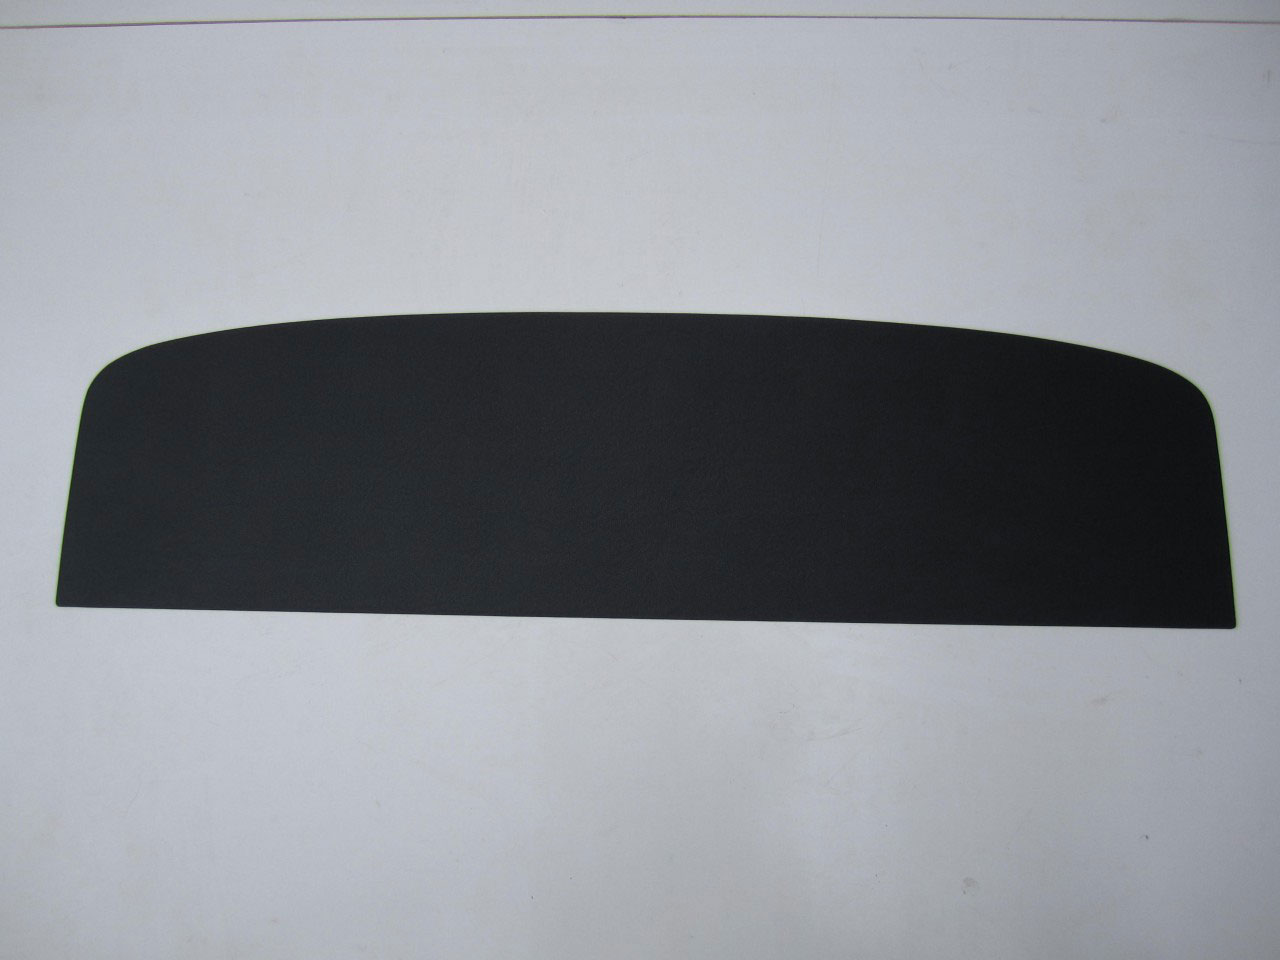 Holden Monaro HT Monaro GTS Coupe 10Y Black & Houndstooth Parcel Shelf (Image 1 of 1)